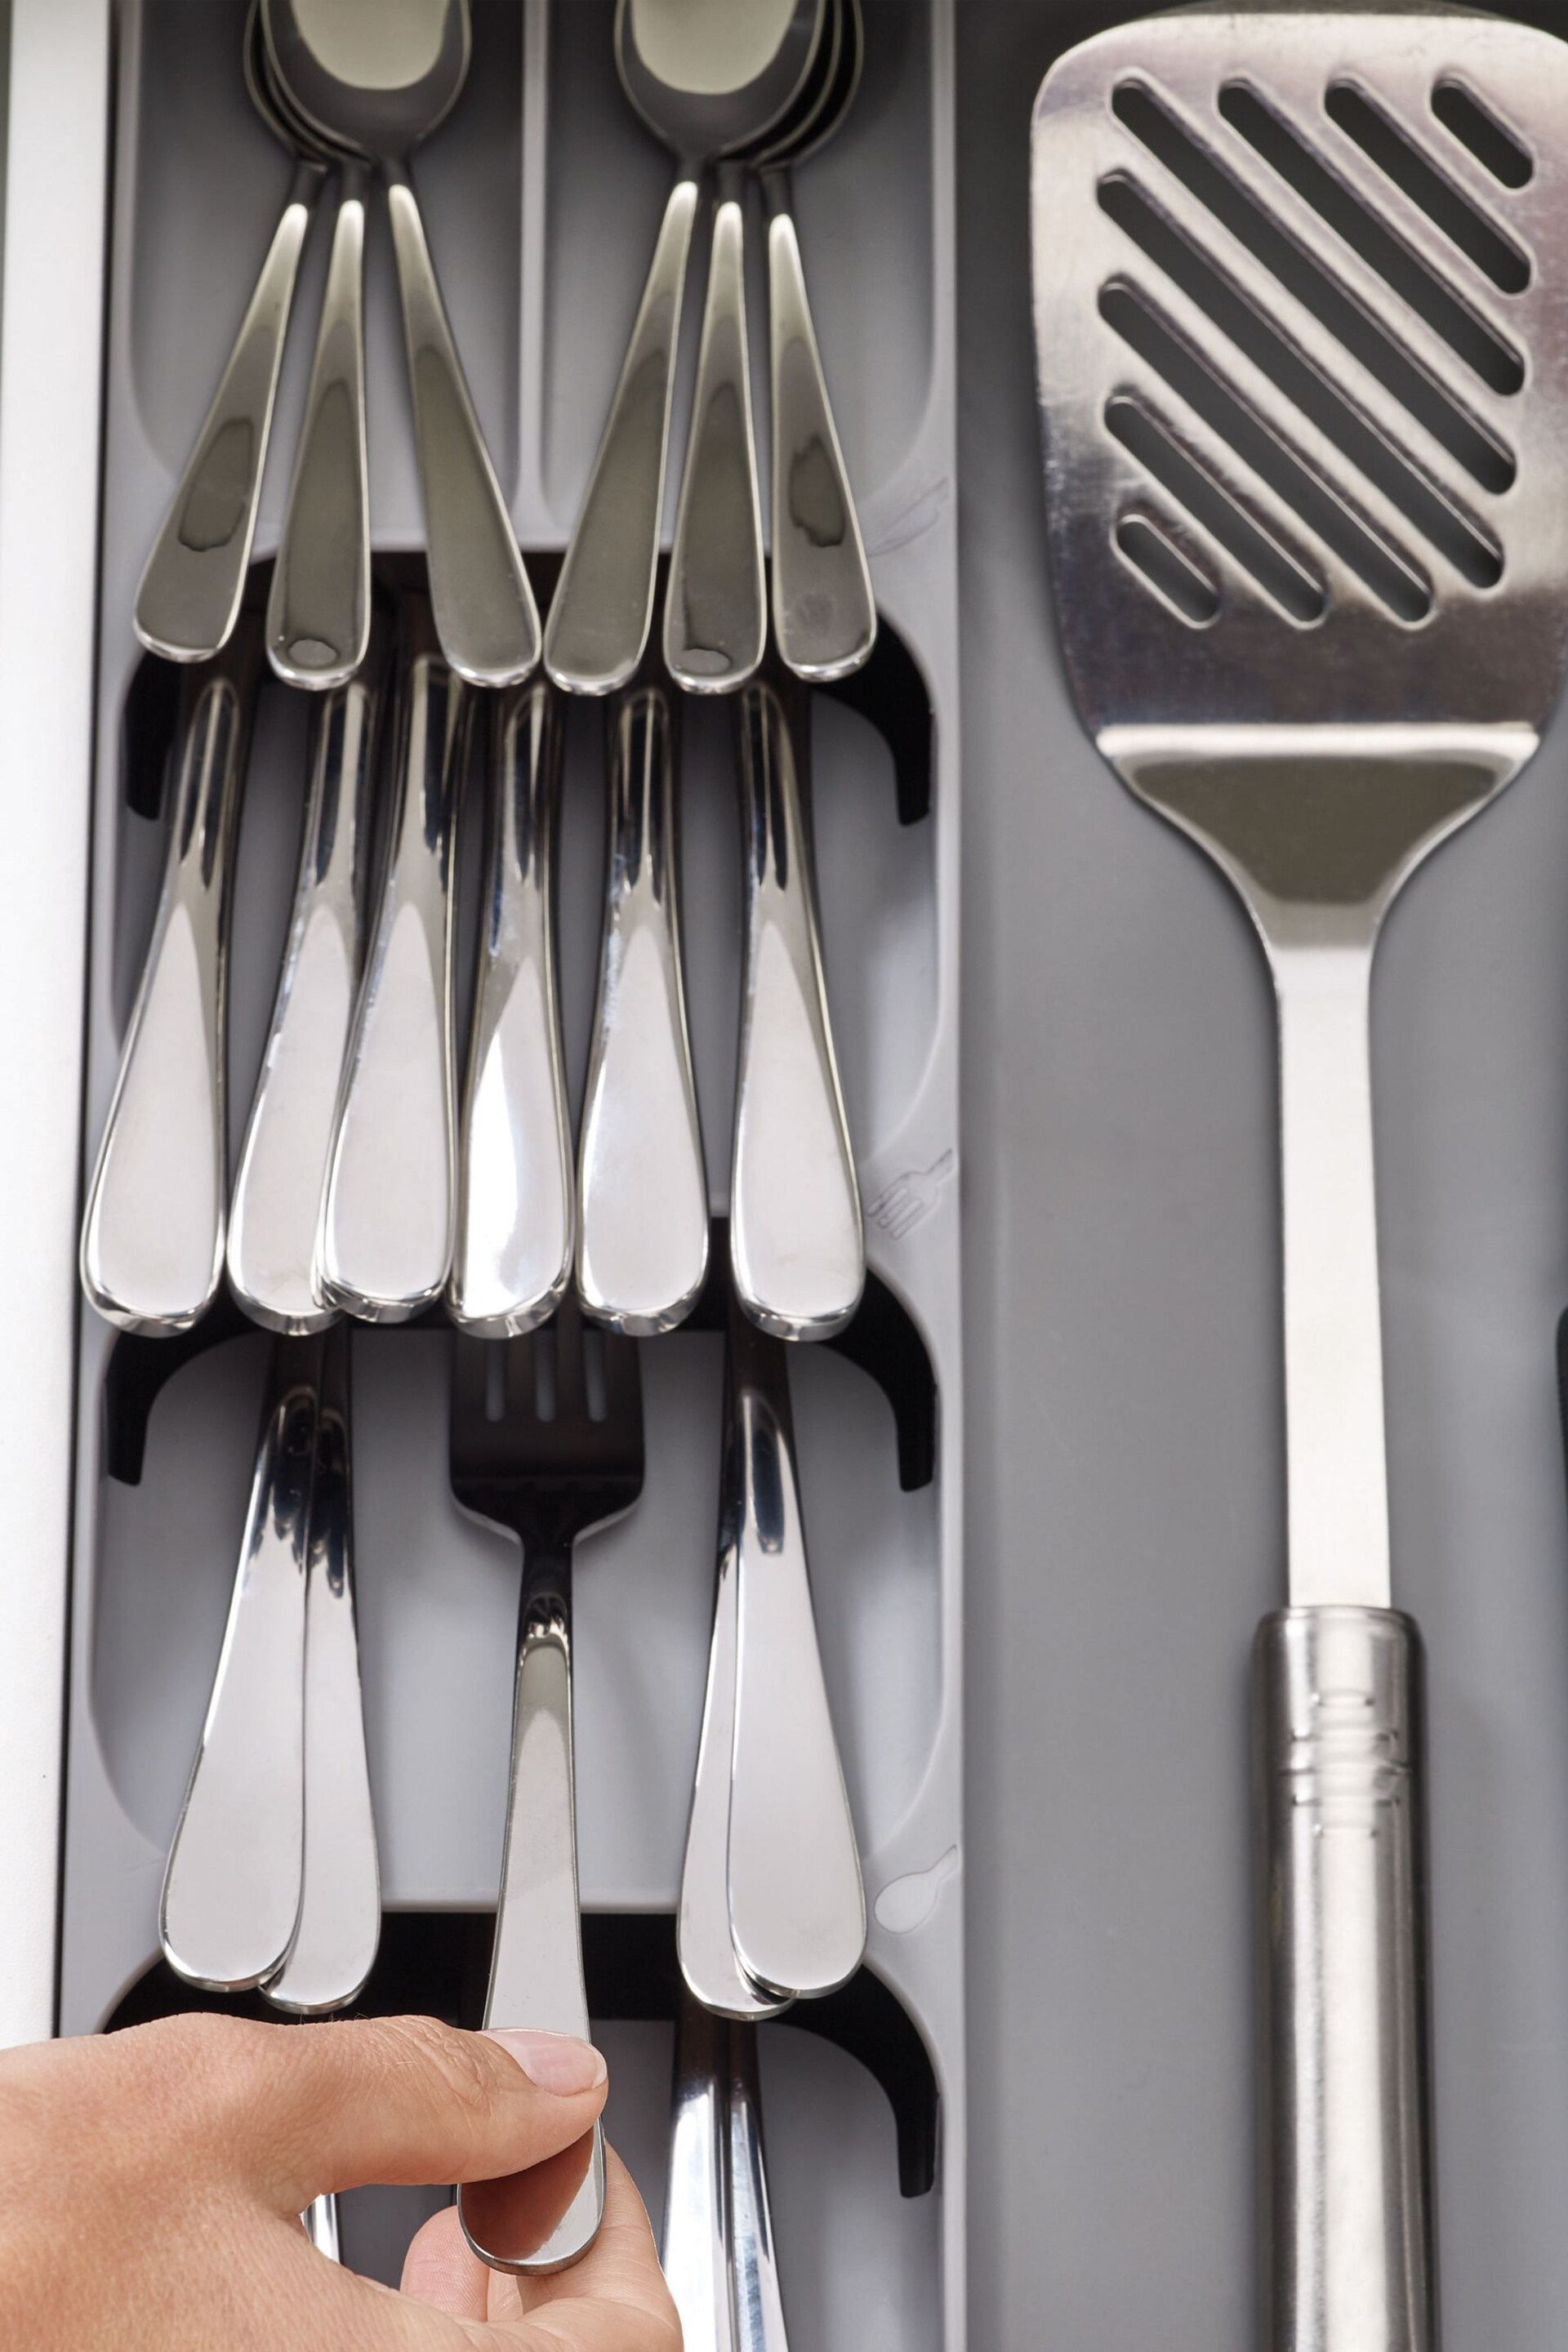 Joseph Joseph Grey DrawerStore Cutlery Utensil Gadget Organiser - Image 3 of 7